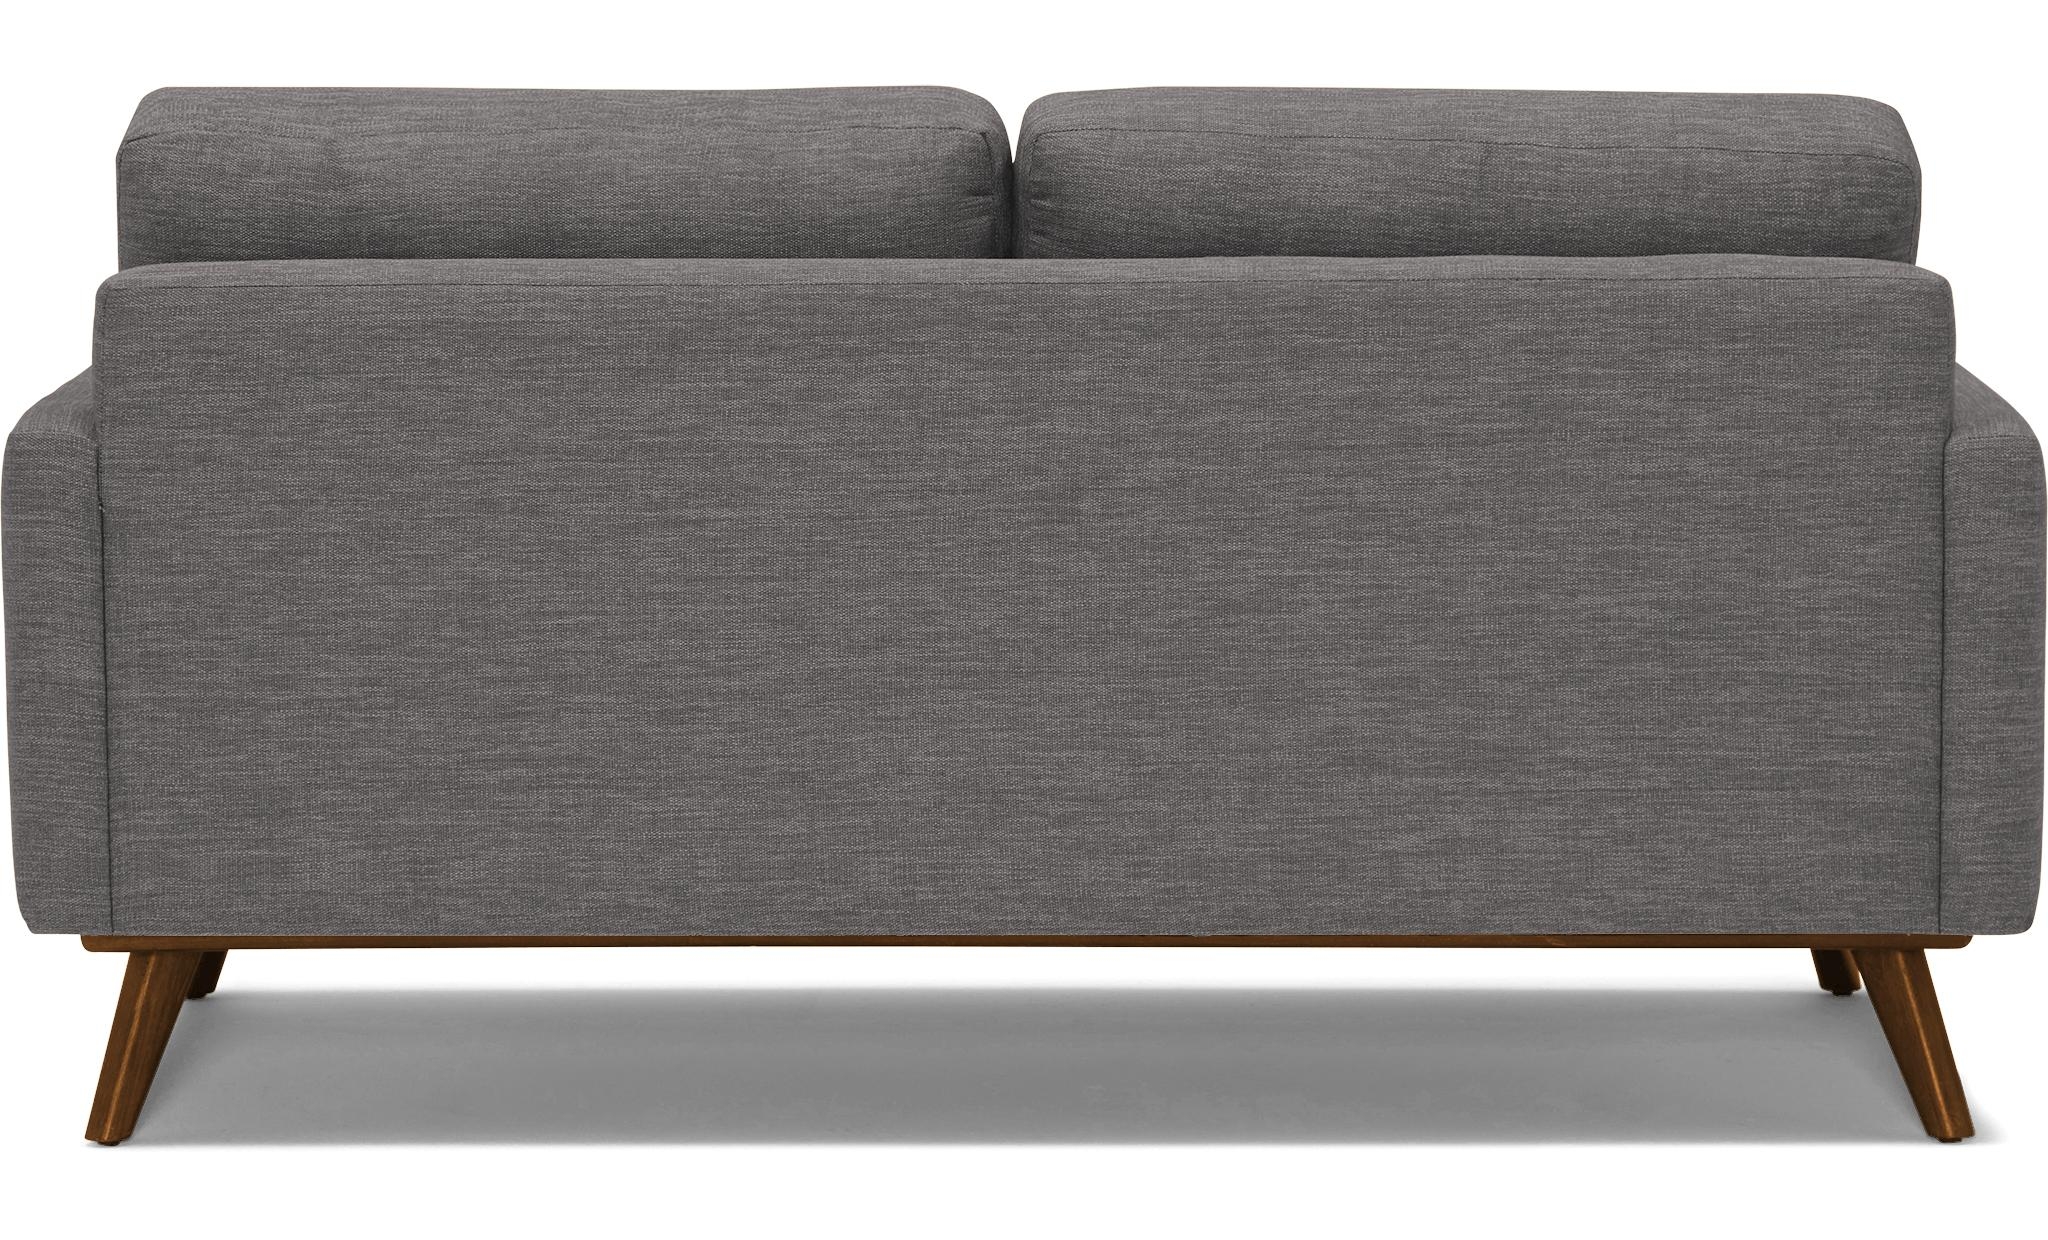 Gray Hopson Mid Century Modern Apartment Sofa - Taylor Felt Grey - Mocha - Image 4